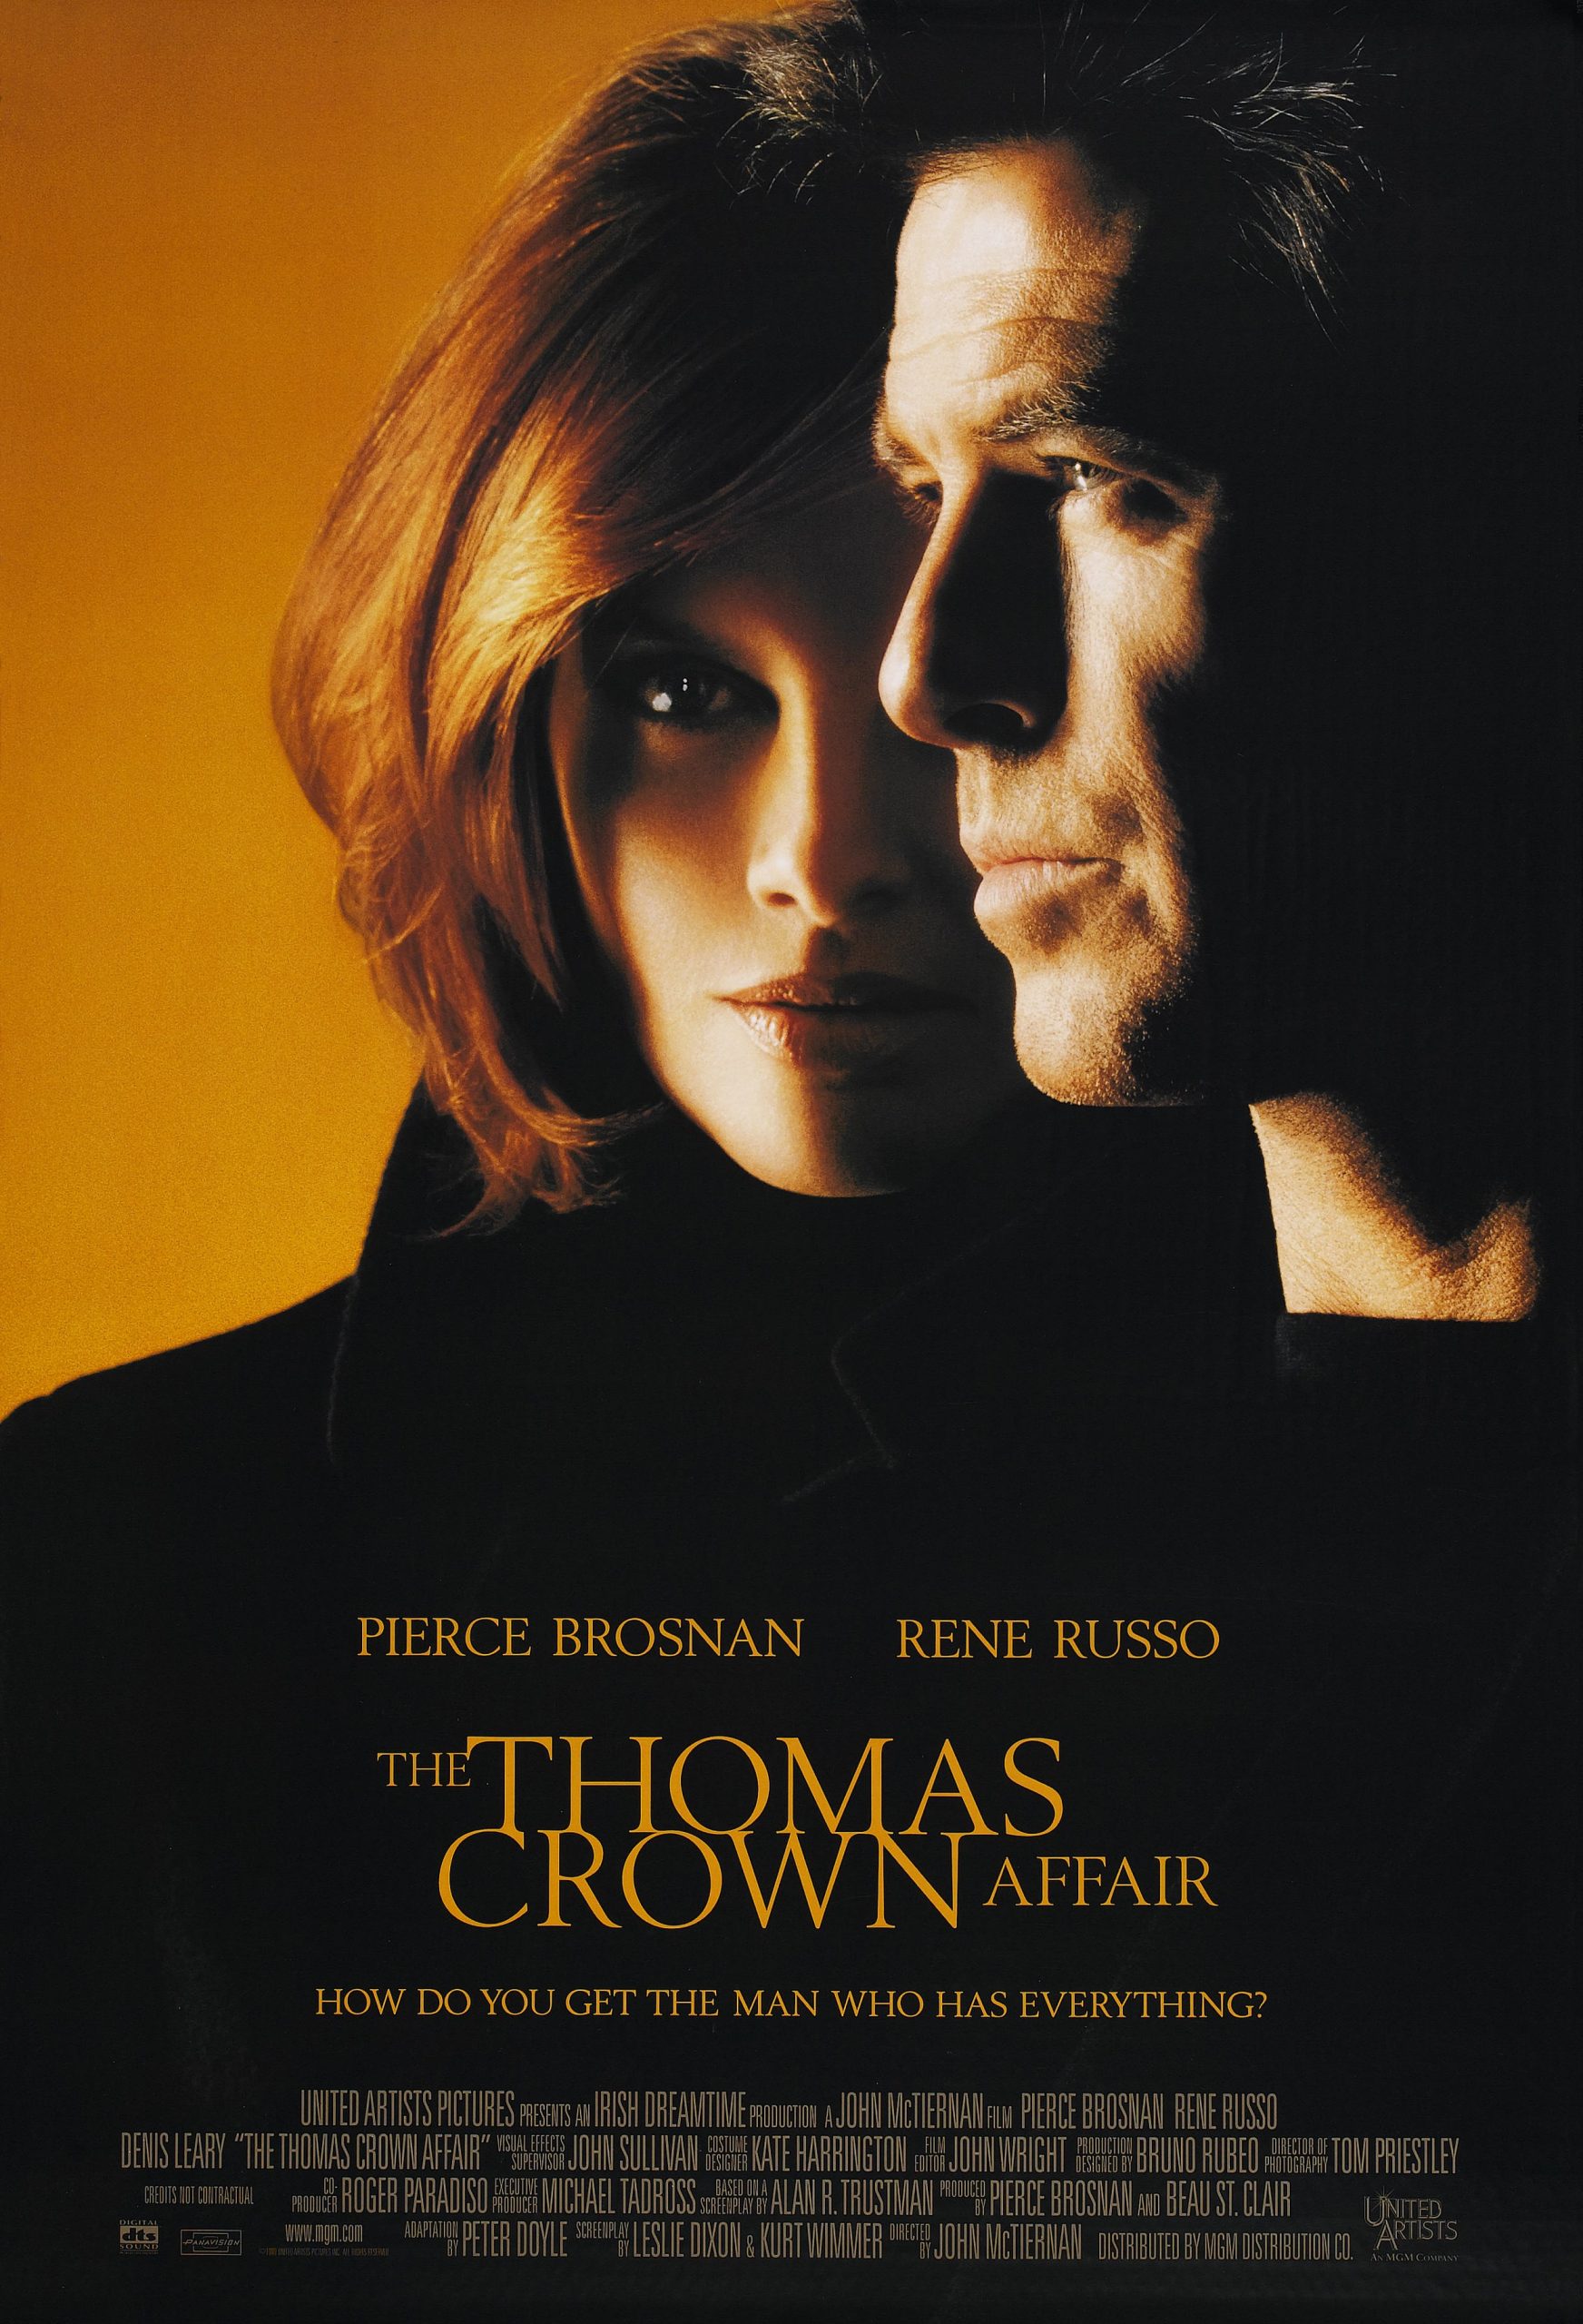 The Thomas crown affair (1999) เกมรักหักเหลี่ยมจารกรรม Pierce Brosnan